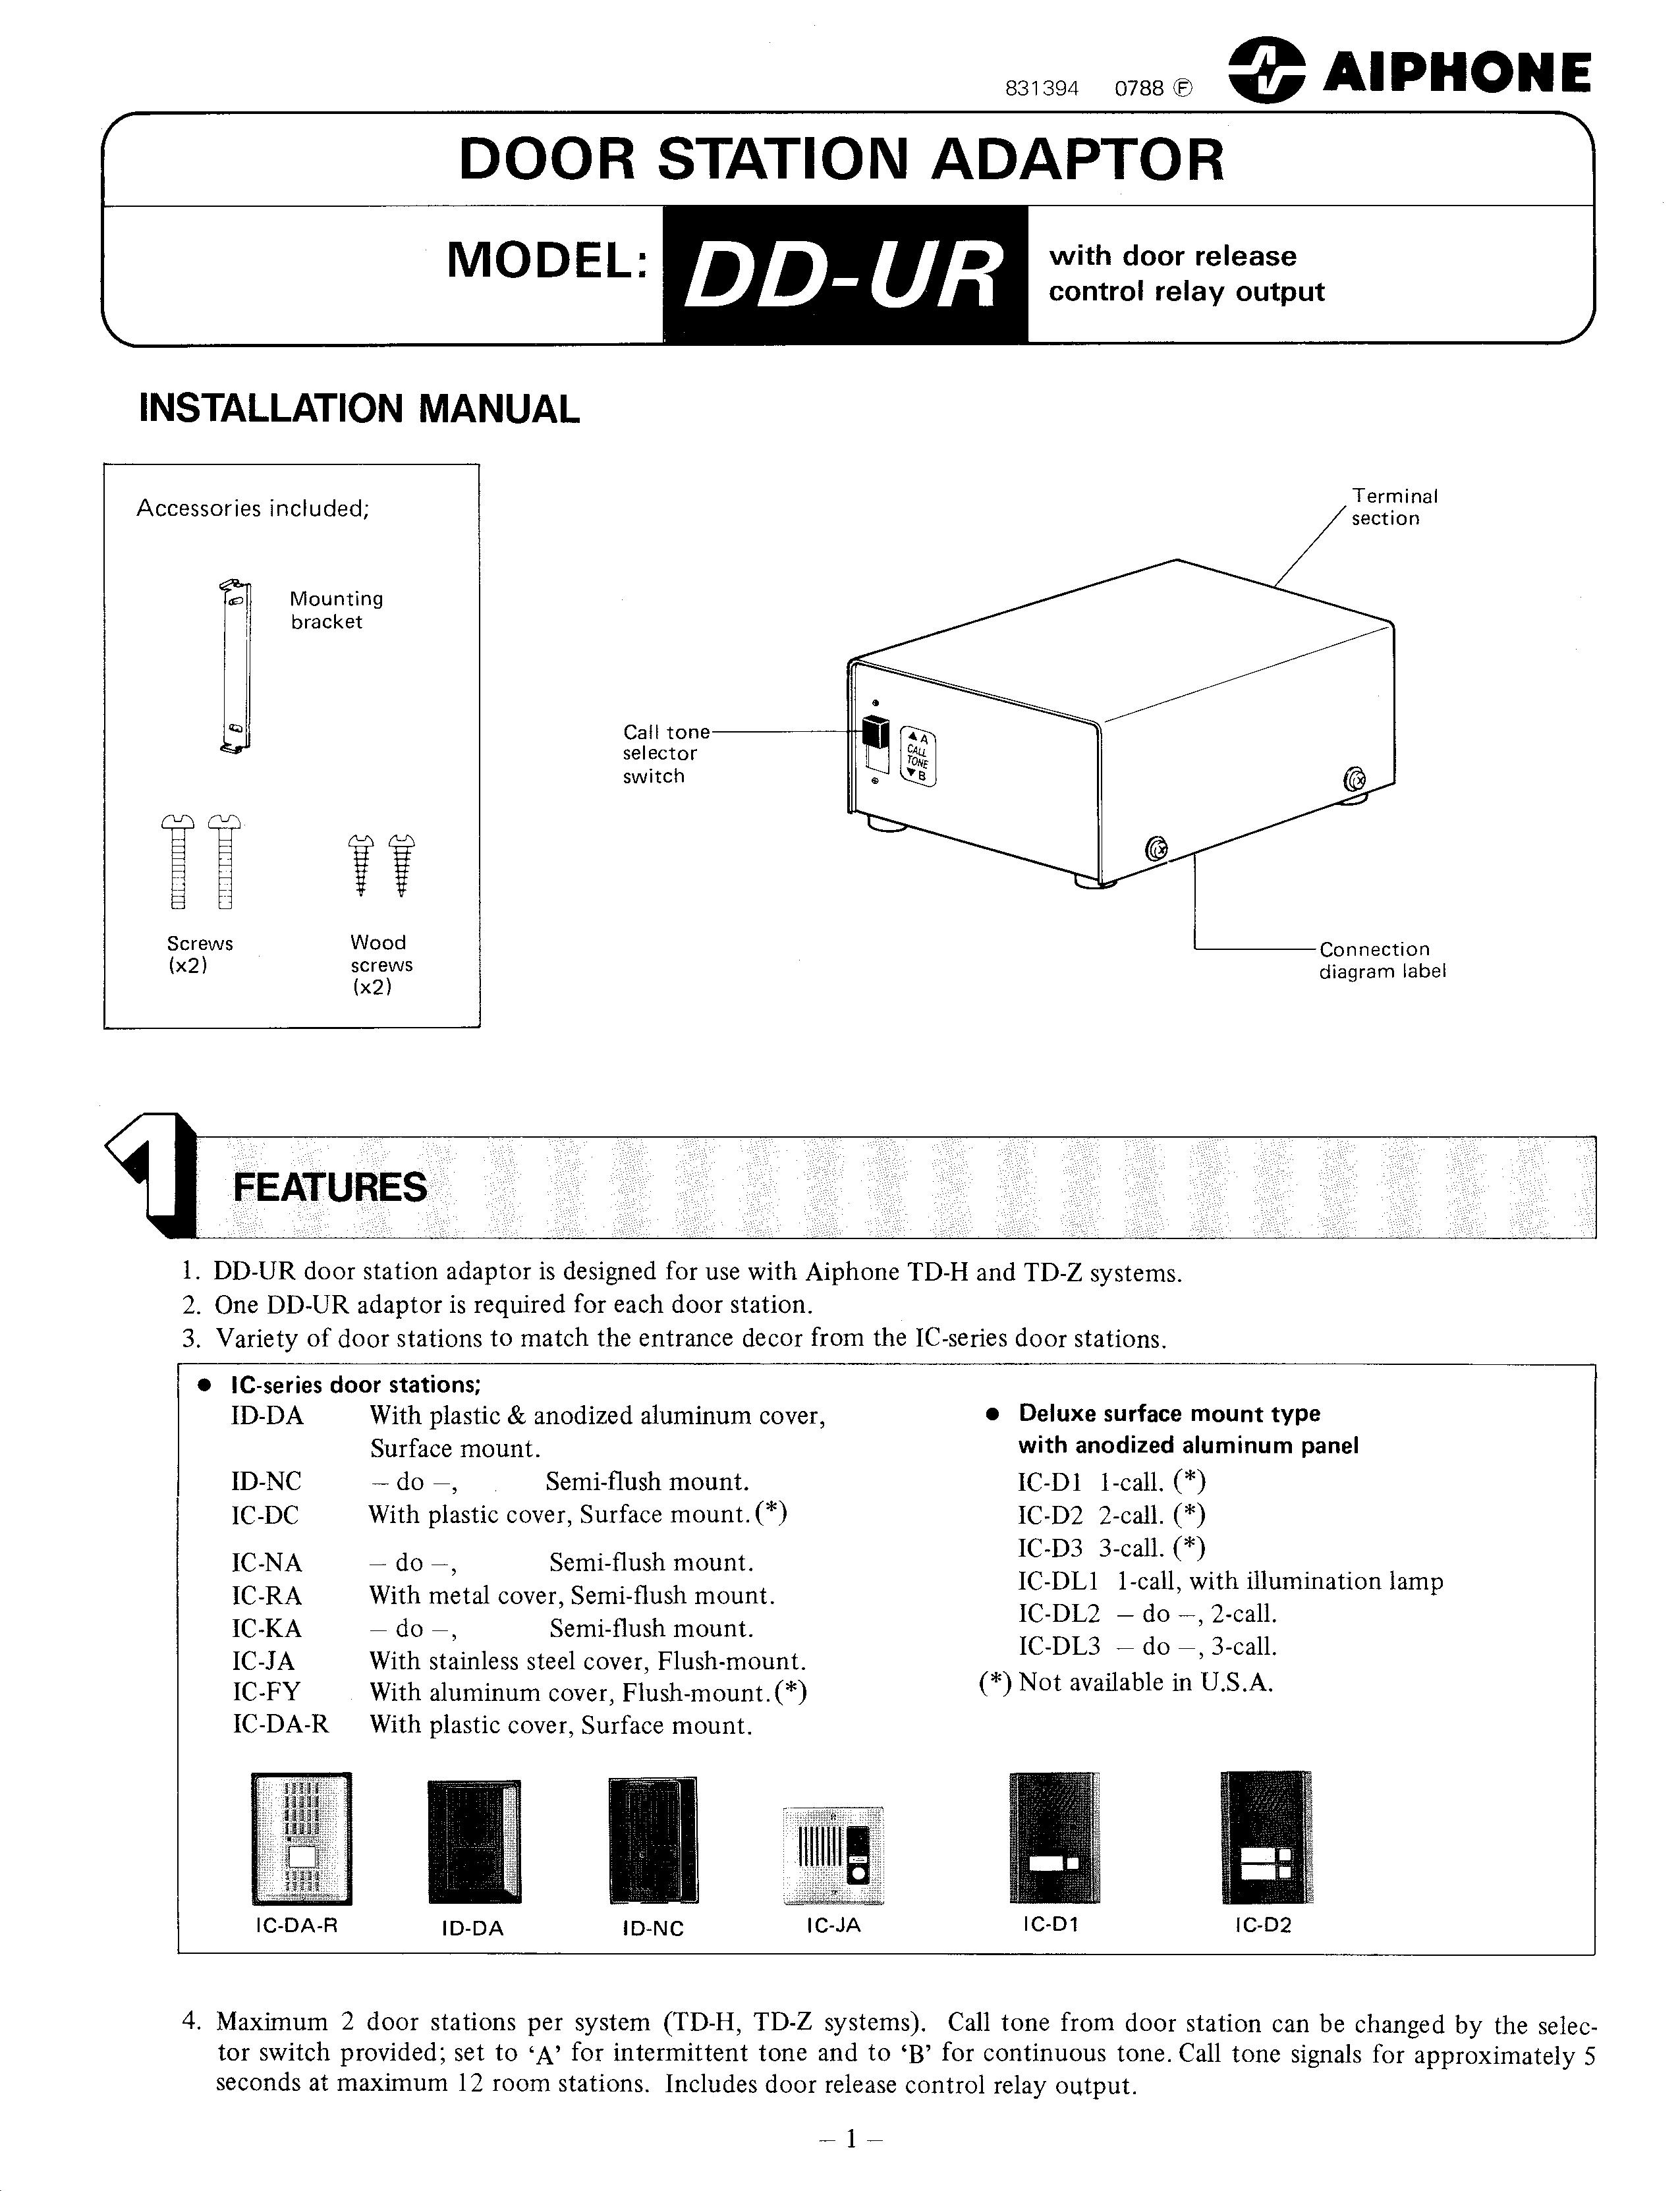 Aiphone DD-UR Swing Sets User Manual